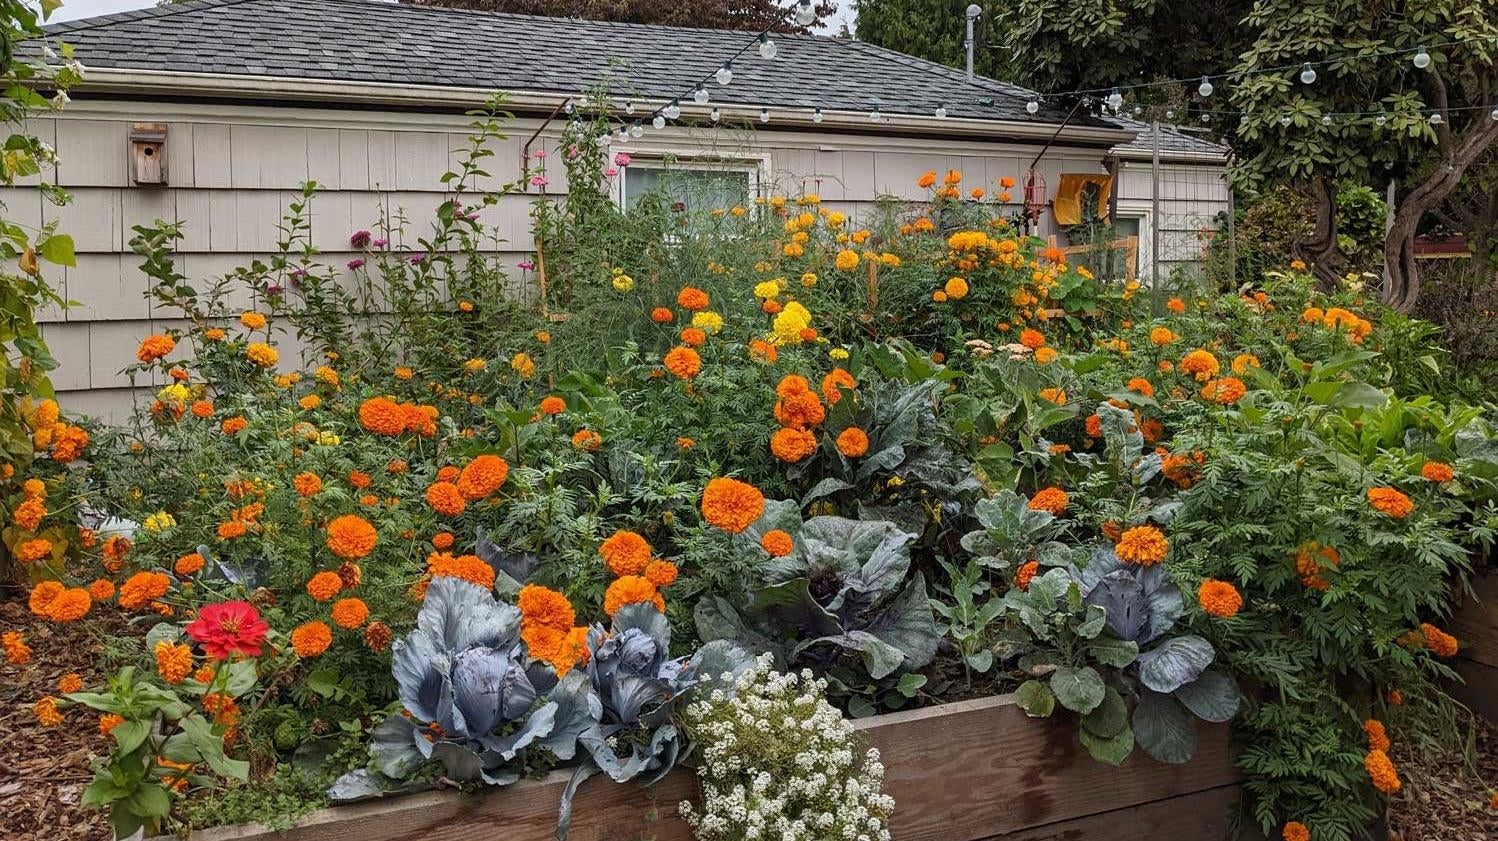 My reminder to plant fewer African marigolds next year. (Image: Amanda Blum)